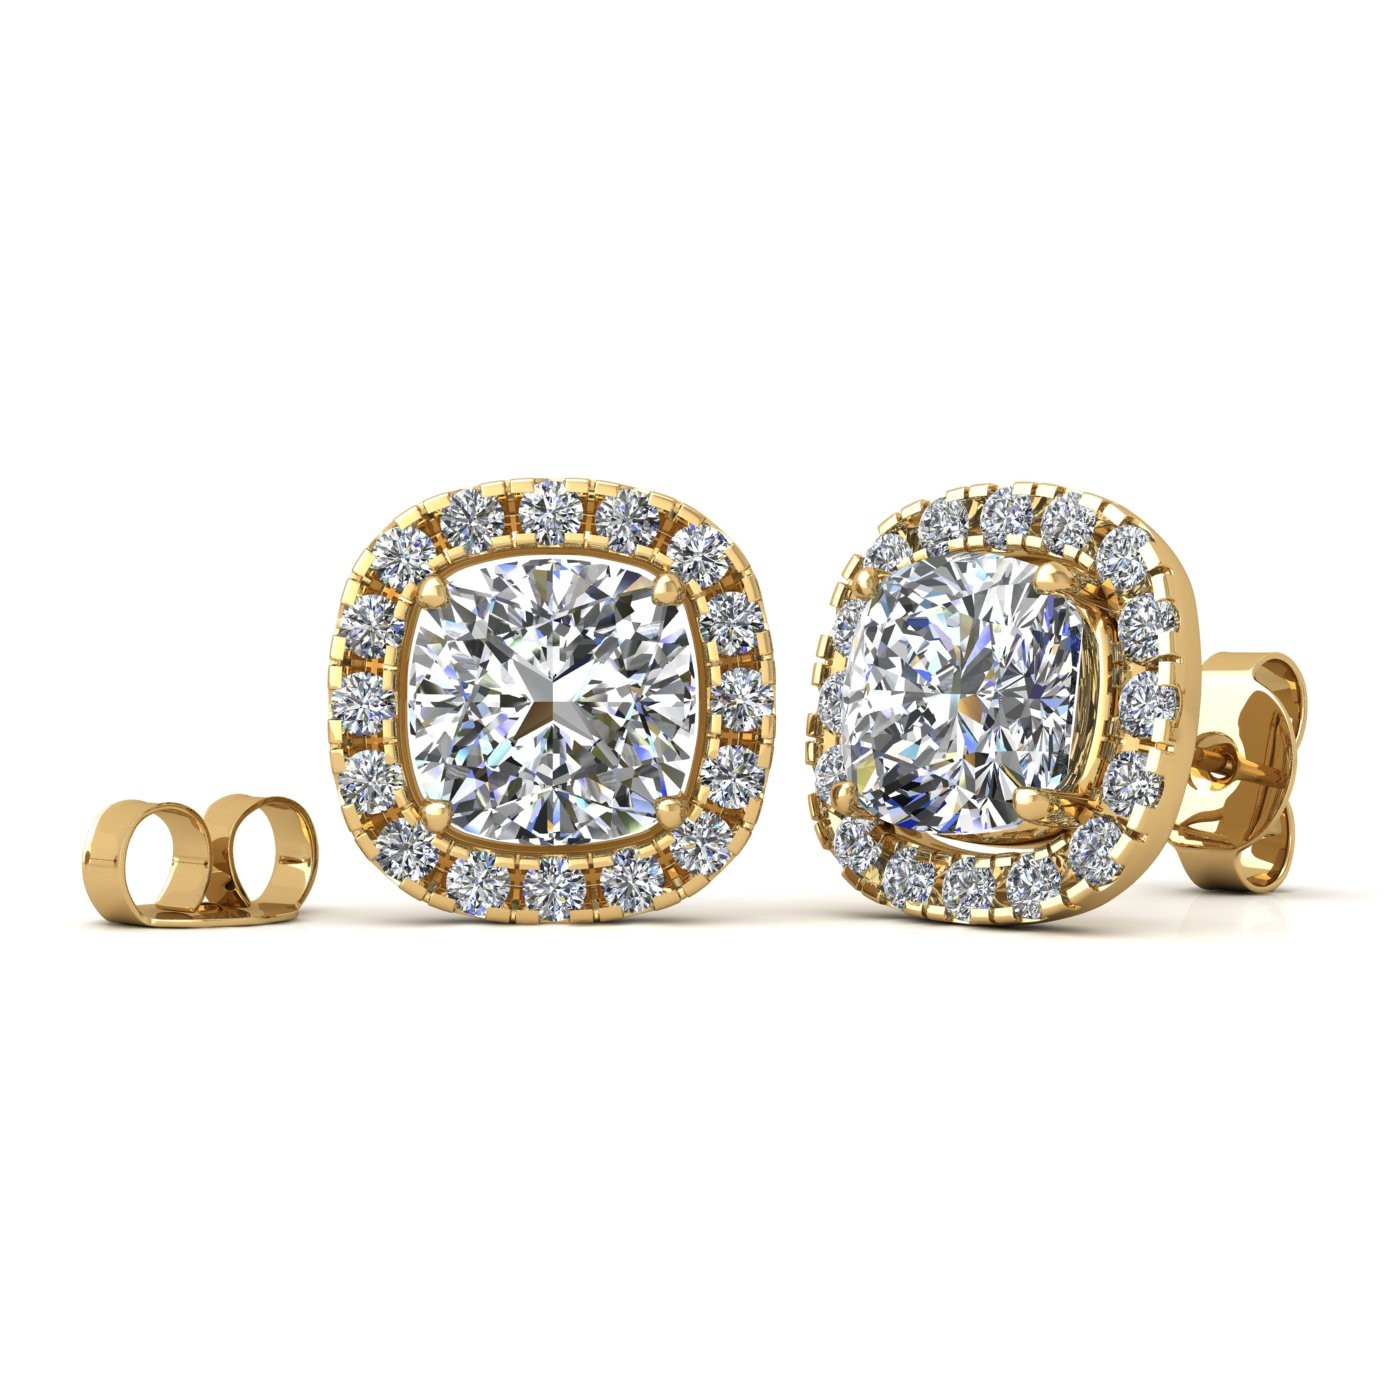 18k white gold 1,2 ct each (2,4 tcw) 4 prongs cushion shape diamond earrings with diamond pavÉ set halo Photos & images